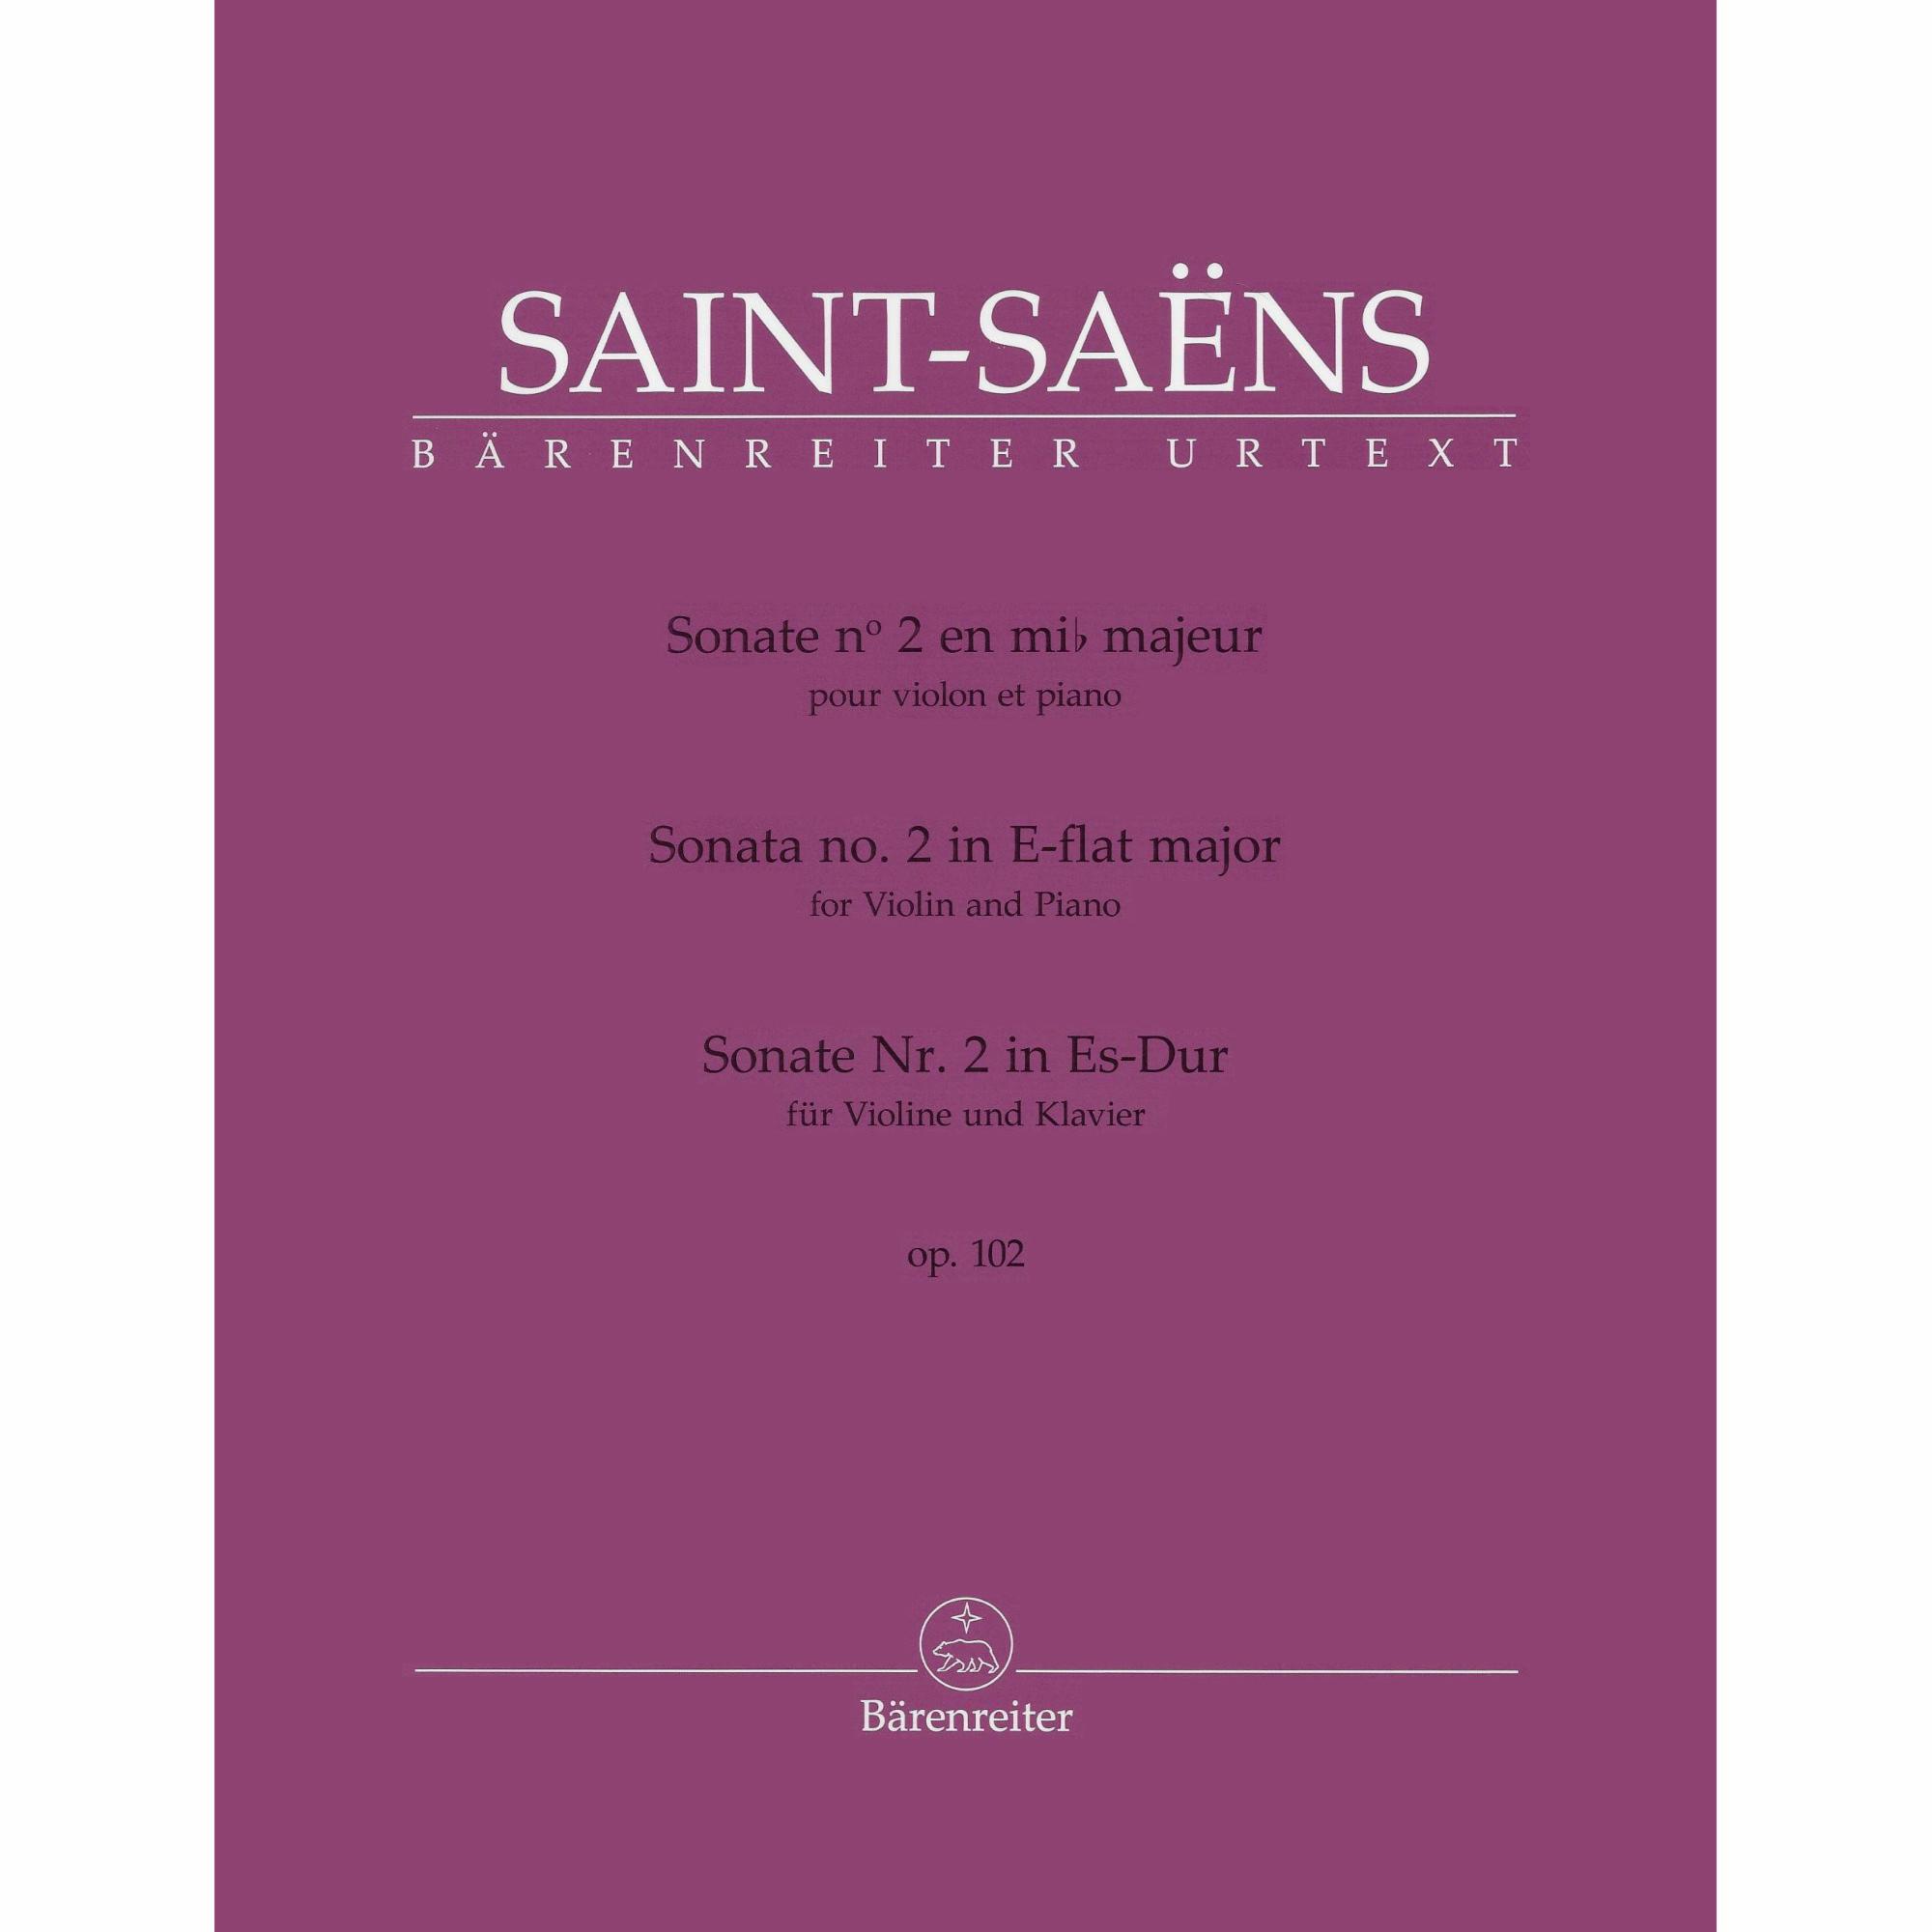 Saint-Saens -- Sonata No. 2 in E-flat Major, Op. 102 for Violin and Piano